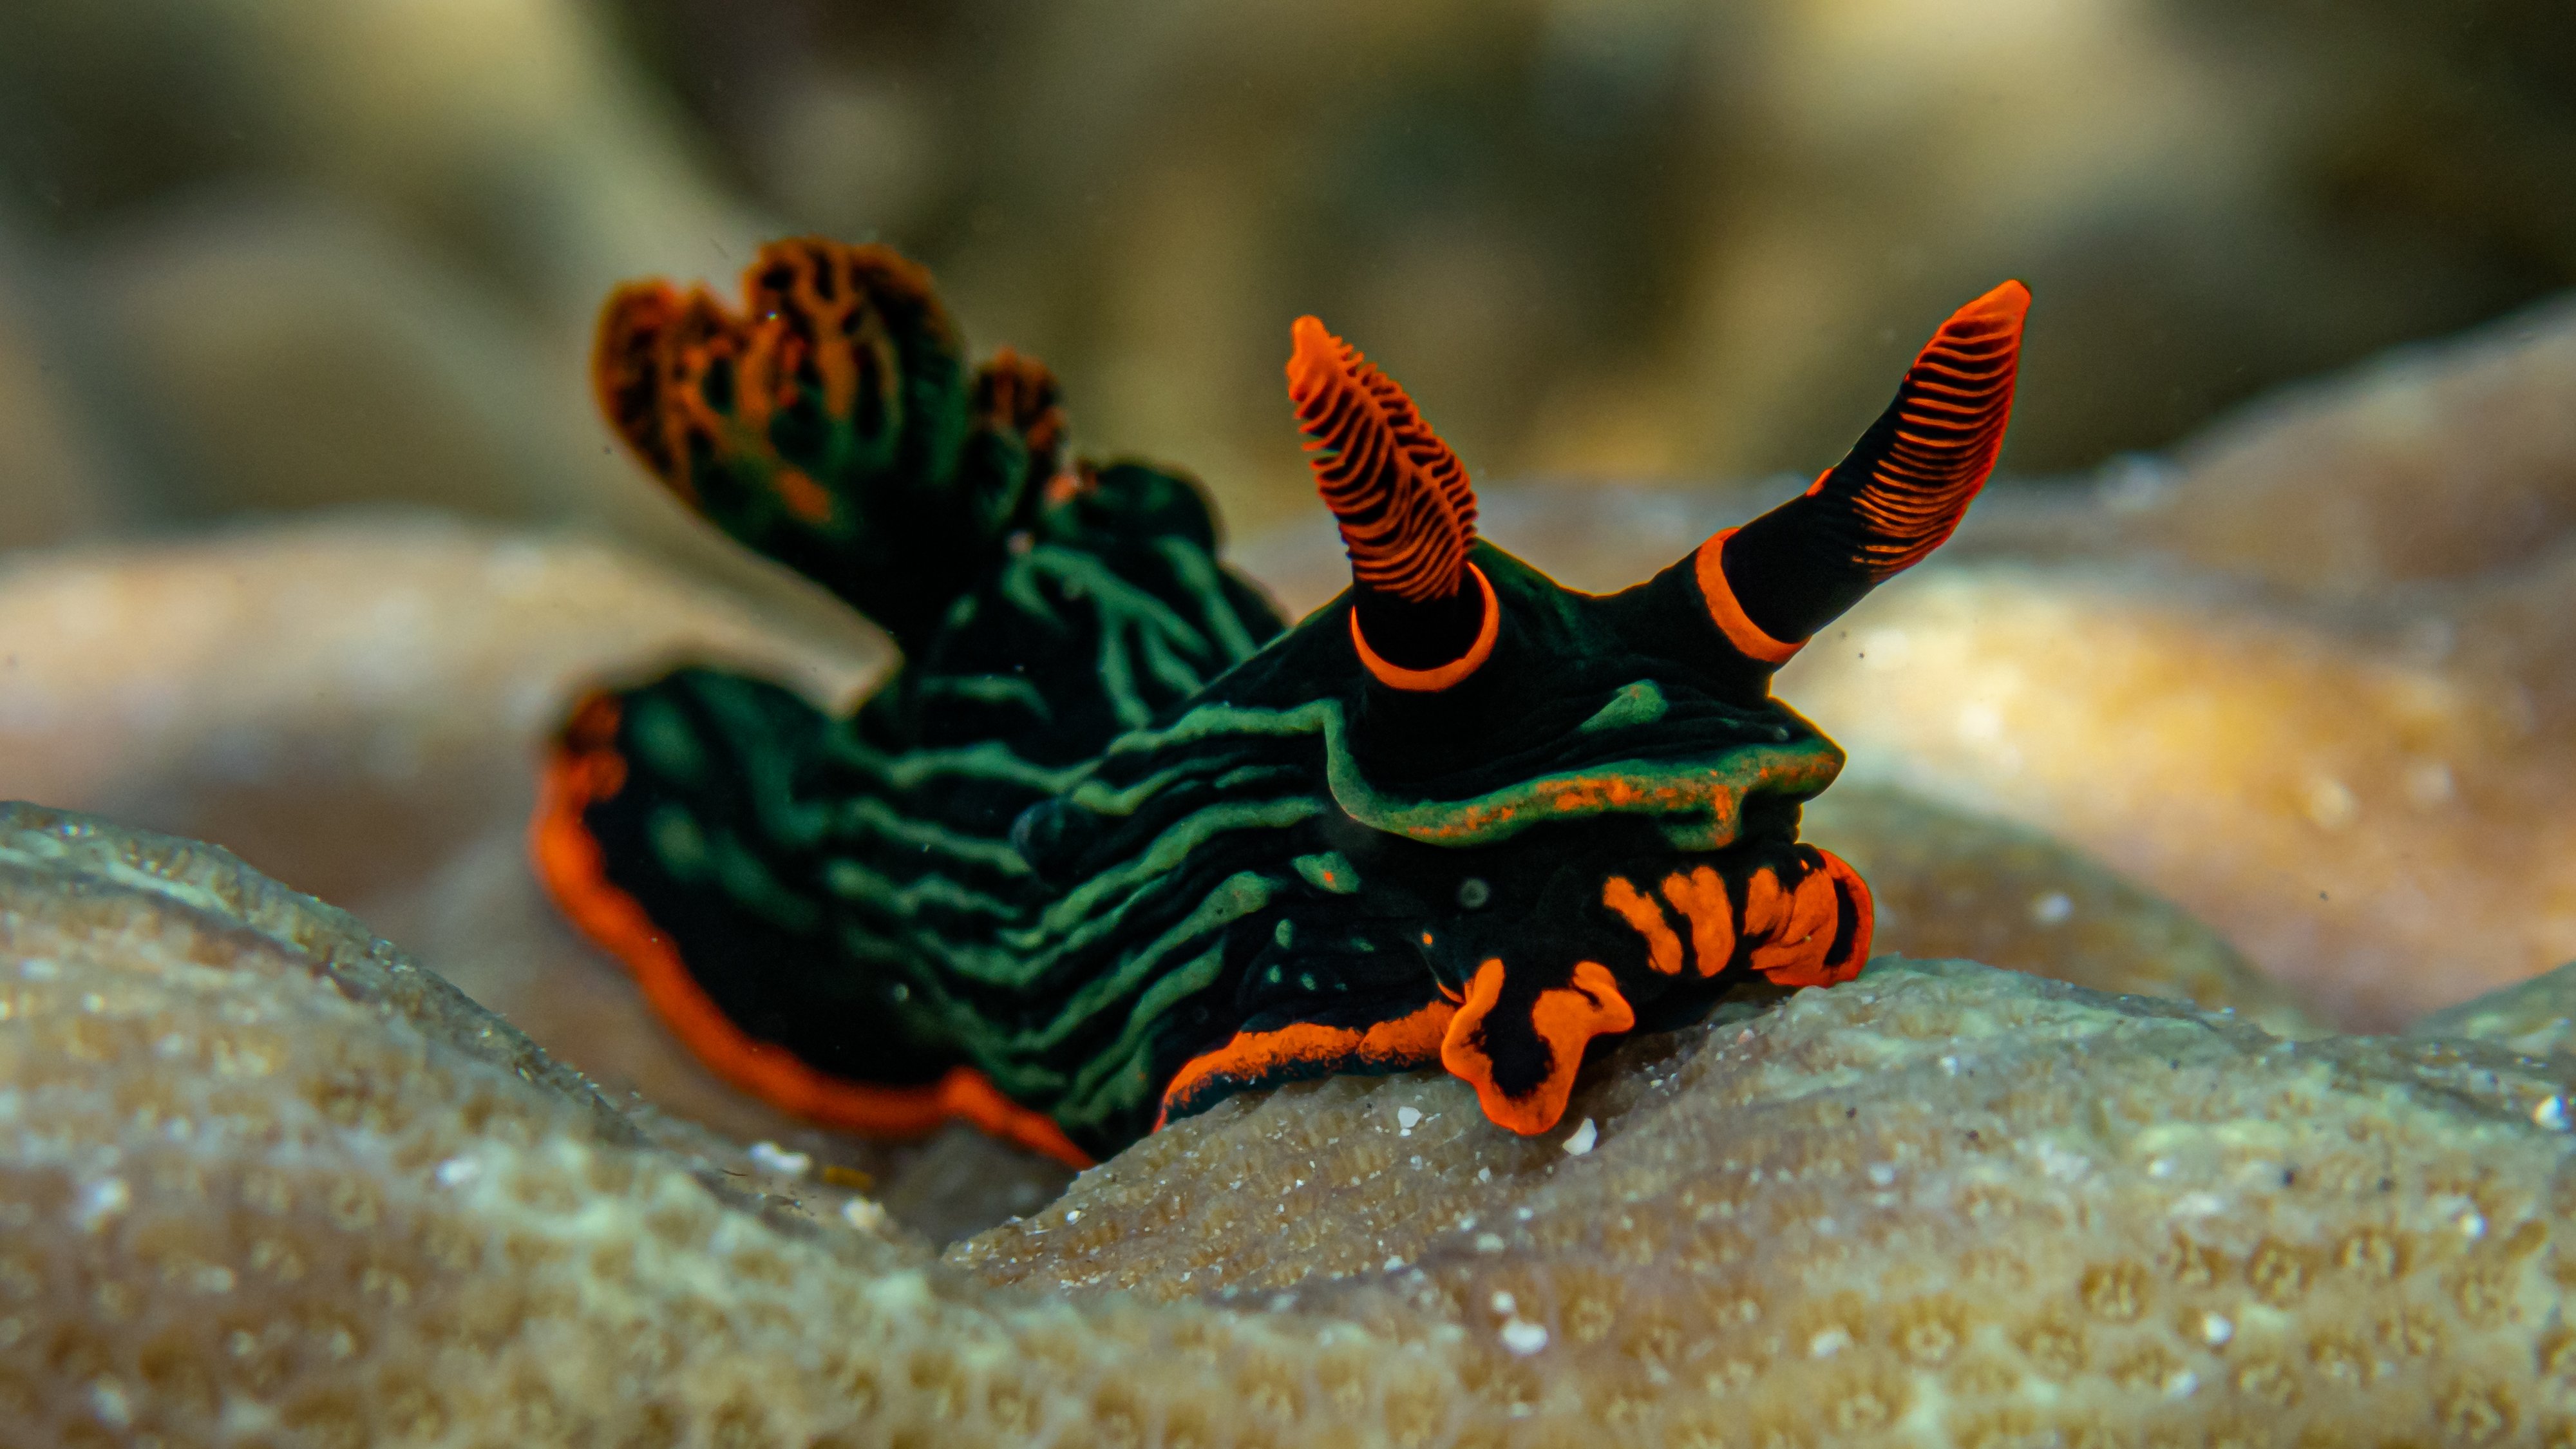 A happy nudibranch